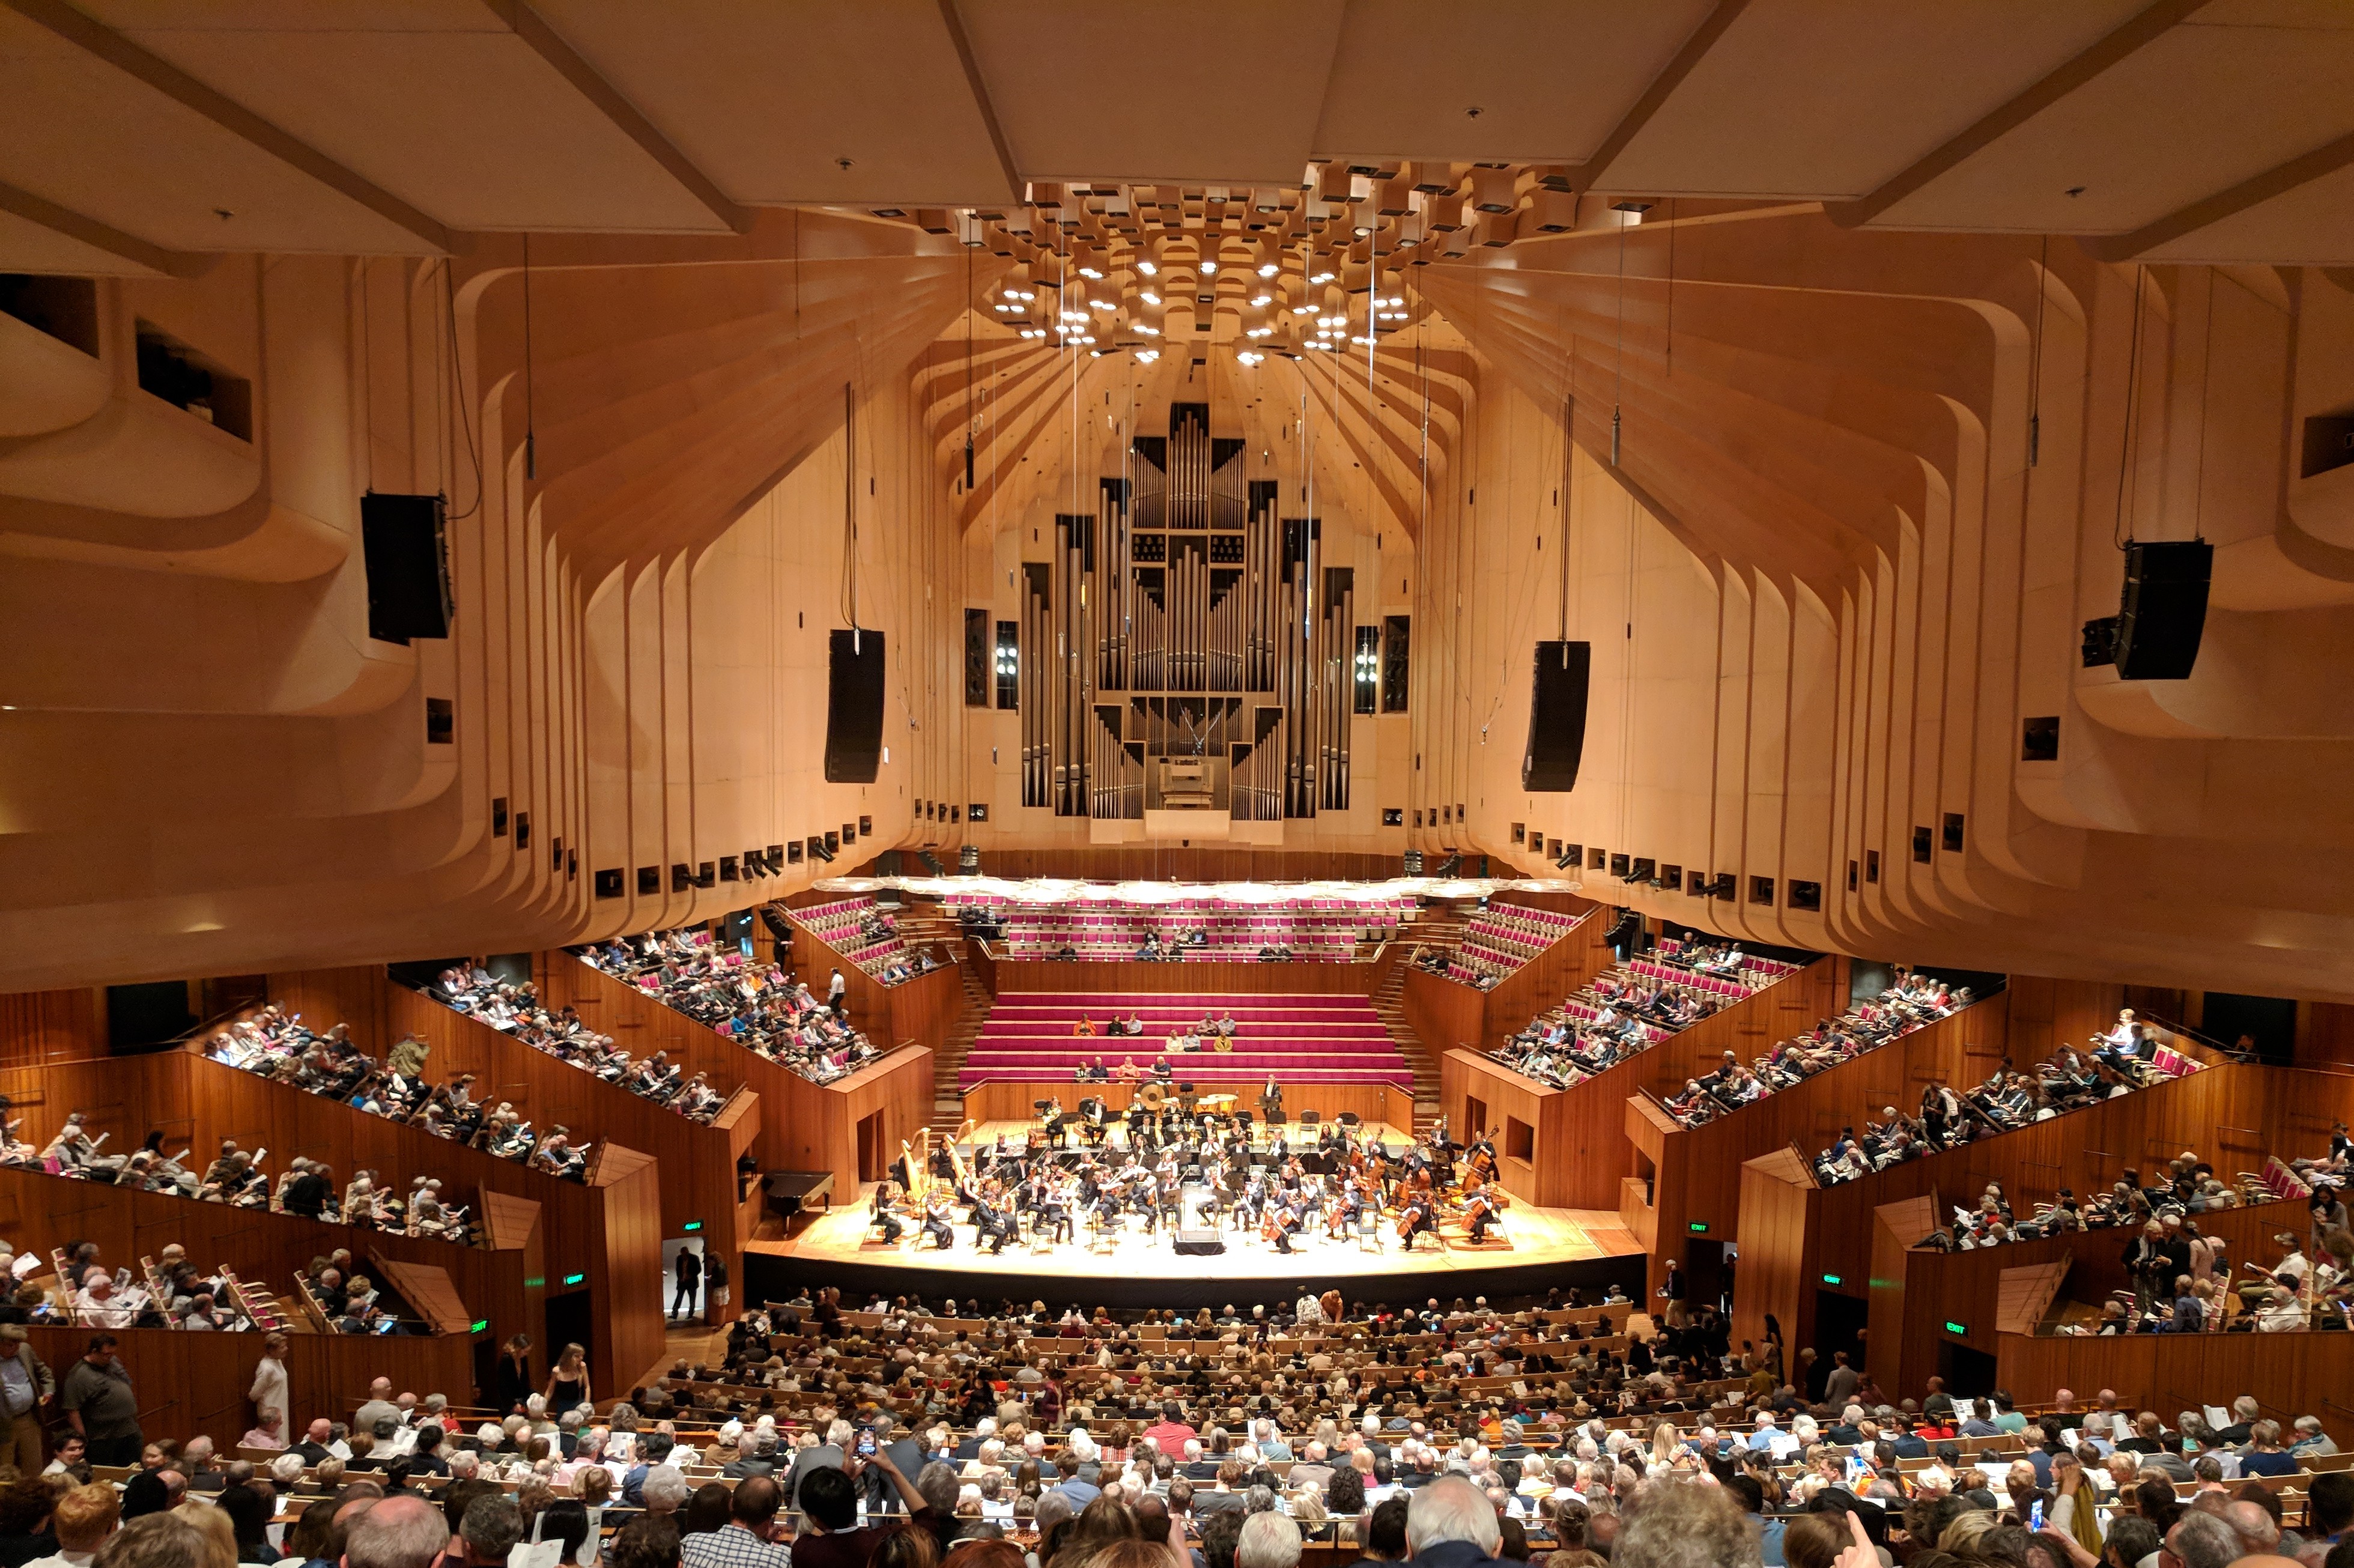 Sydney Opera House Tour